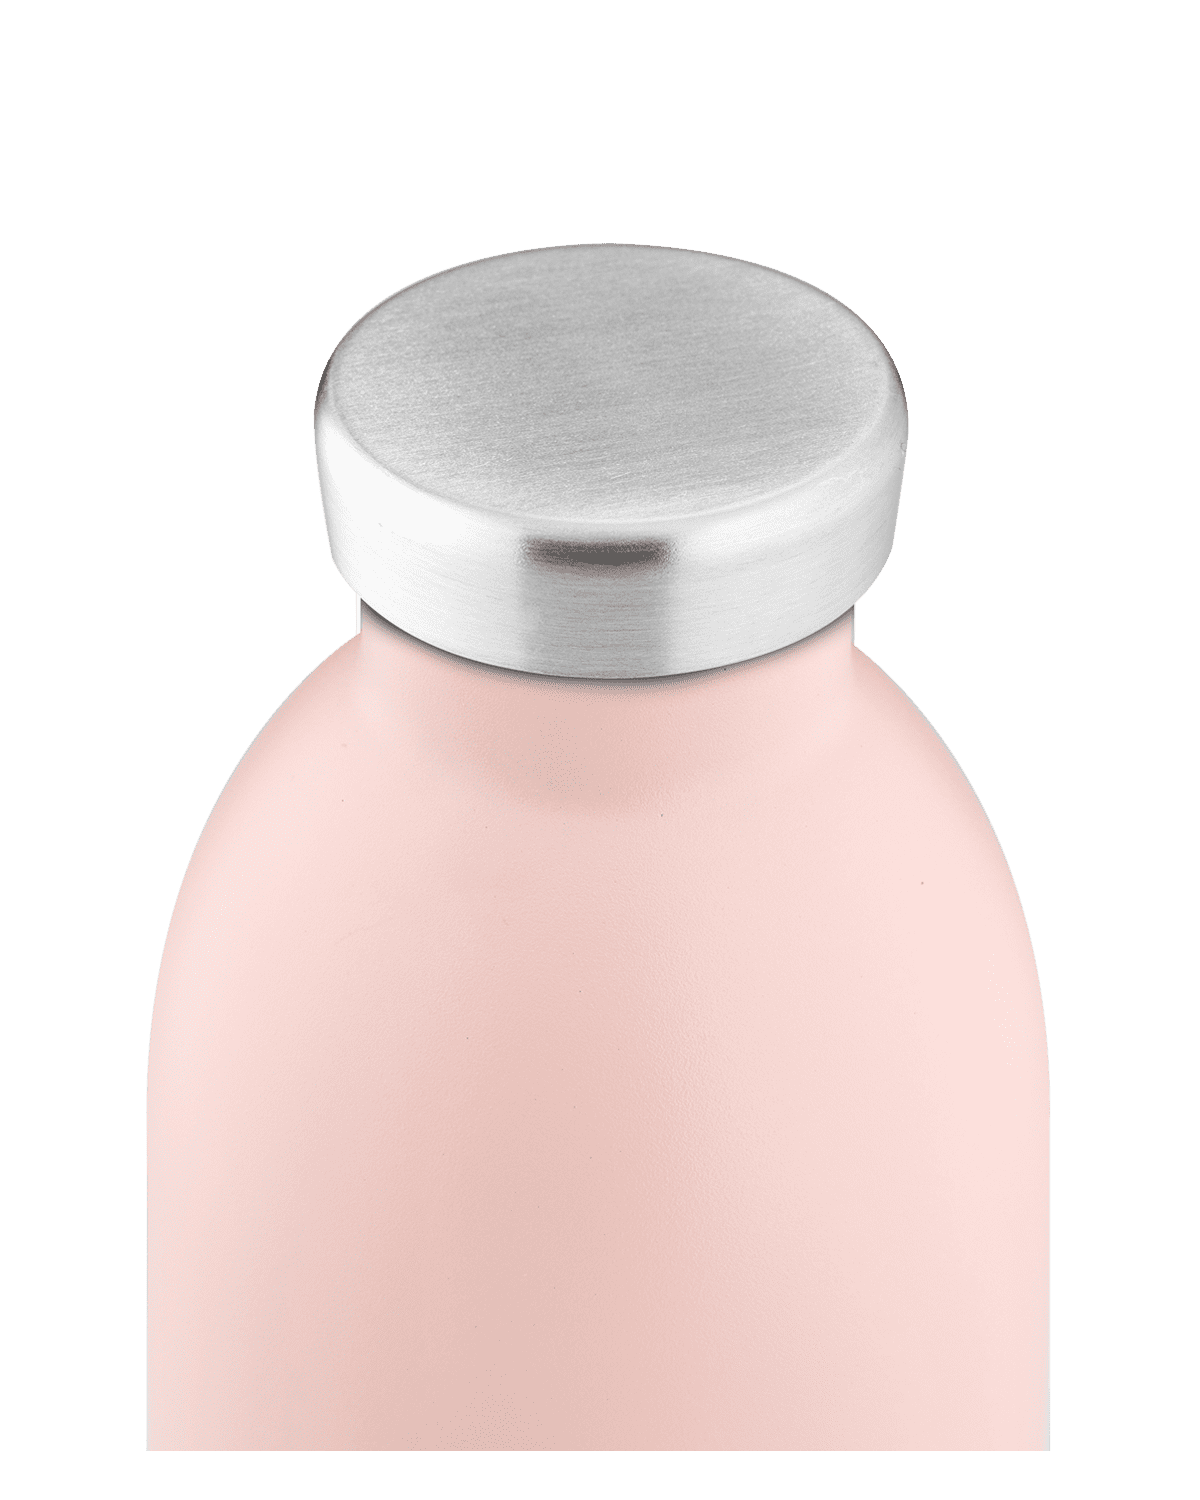 24 bottles saldi Dusty Pink - 850 ml migliori borracce termiche